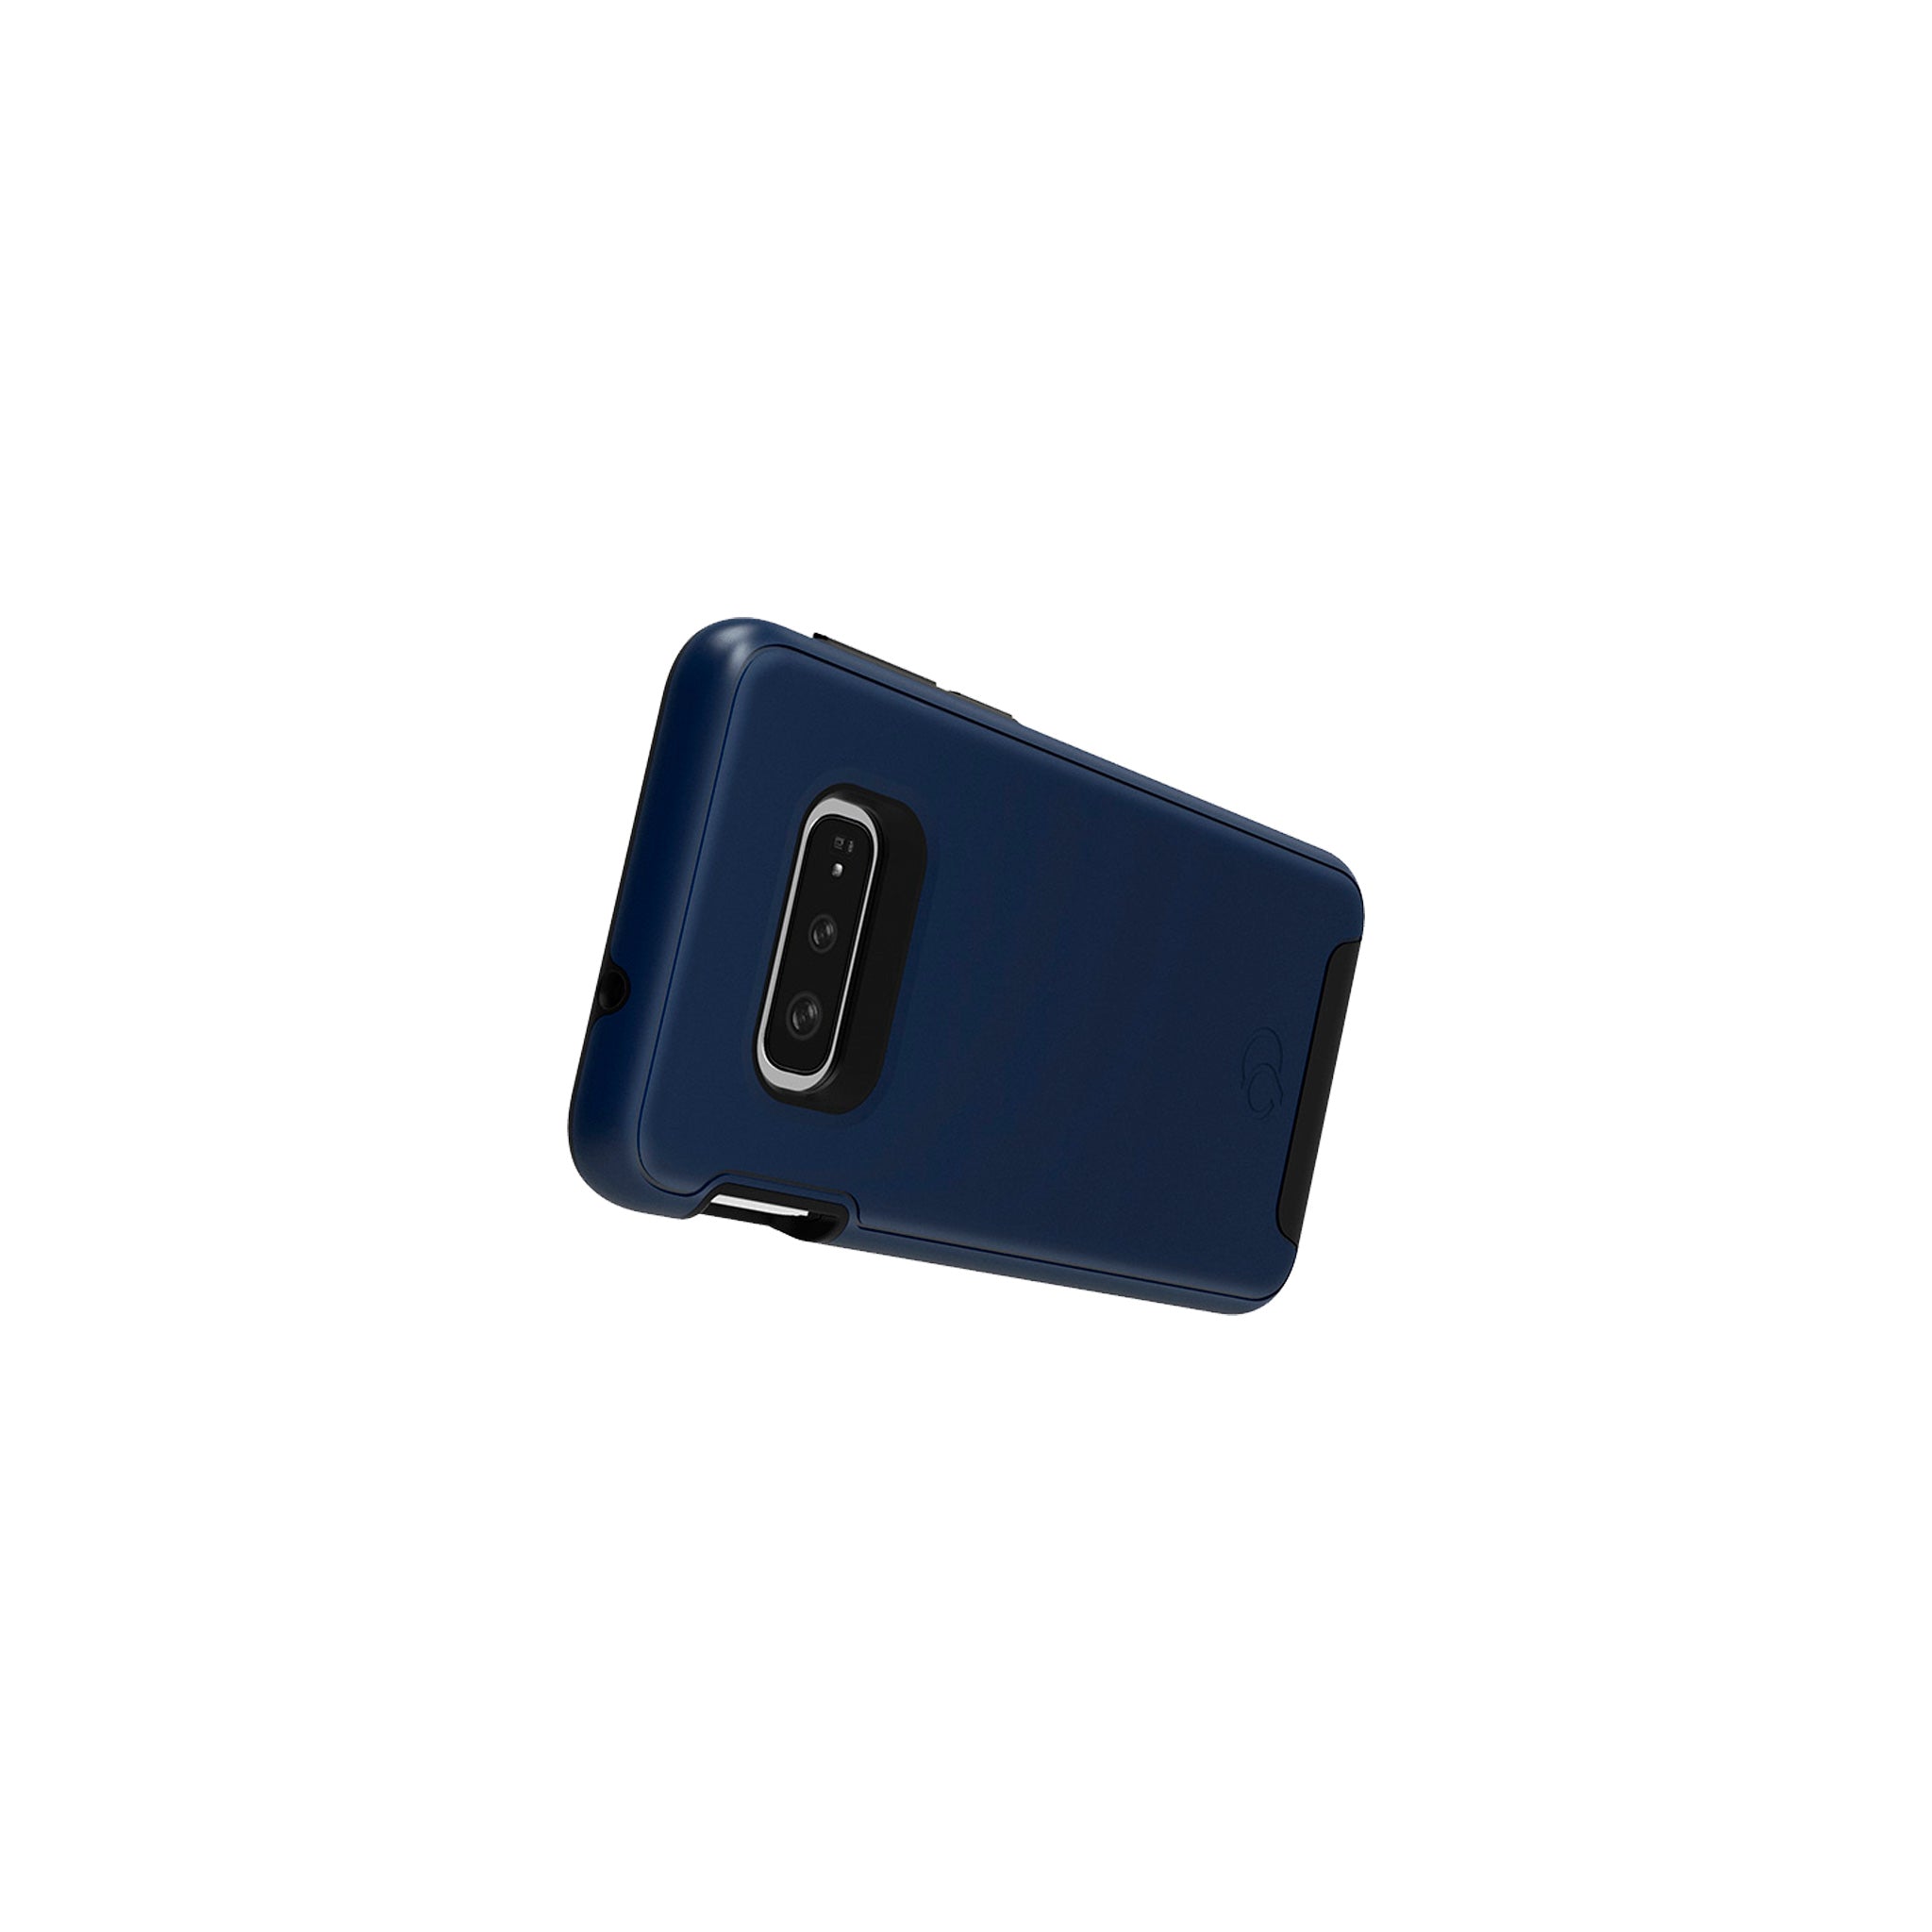 Nimbus9 - Cirrus 2 Case For Samsung Galaxy S10e - Midnight Blue